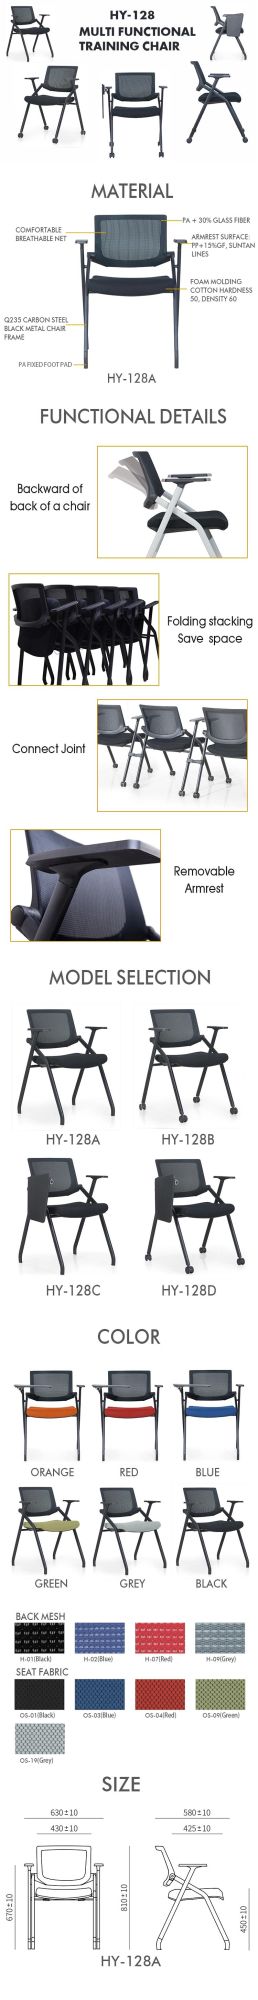 Black Mesh Back Tablet Chair for Training Room